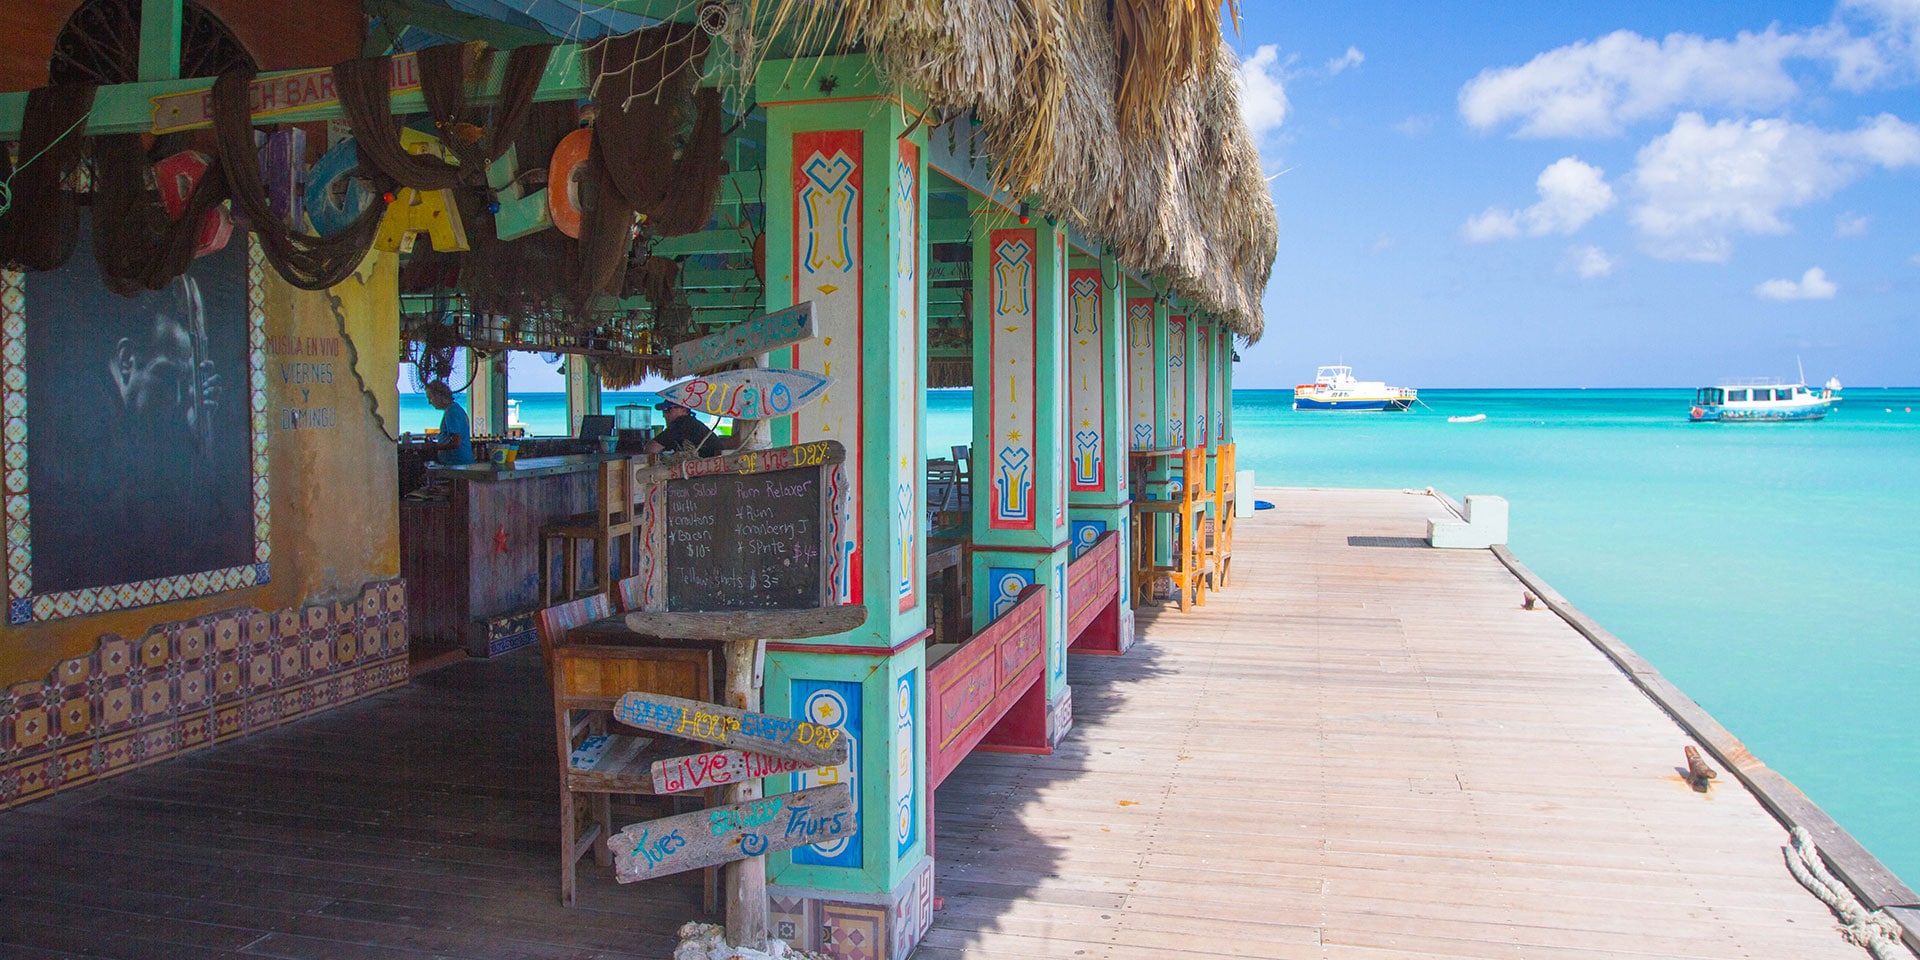 Aruba's Best Bars